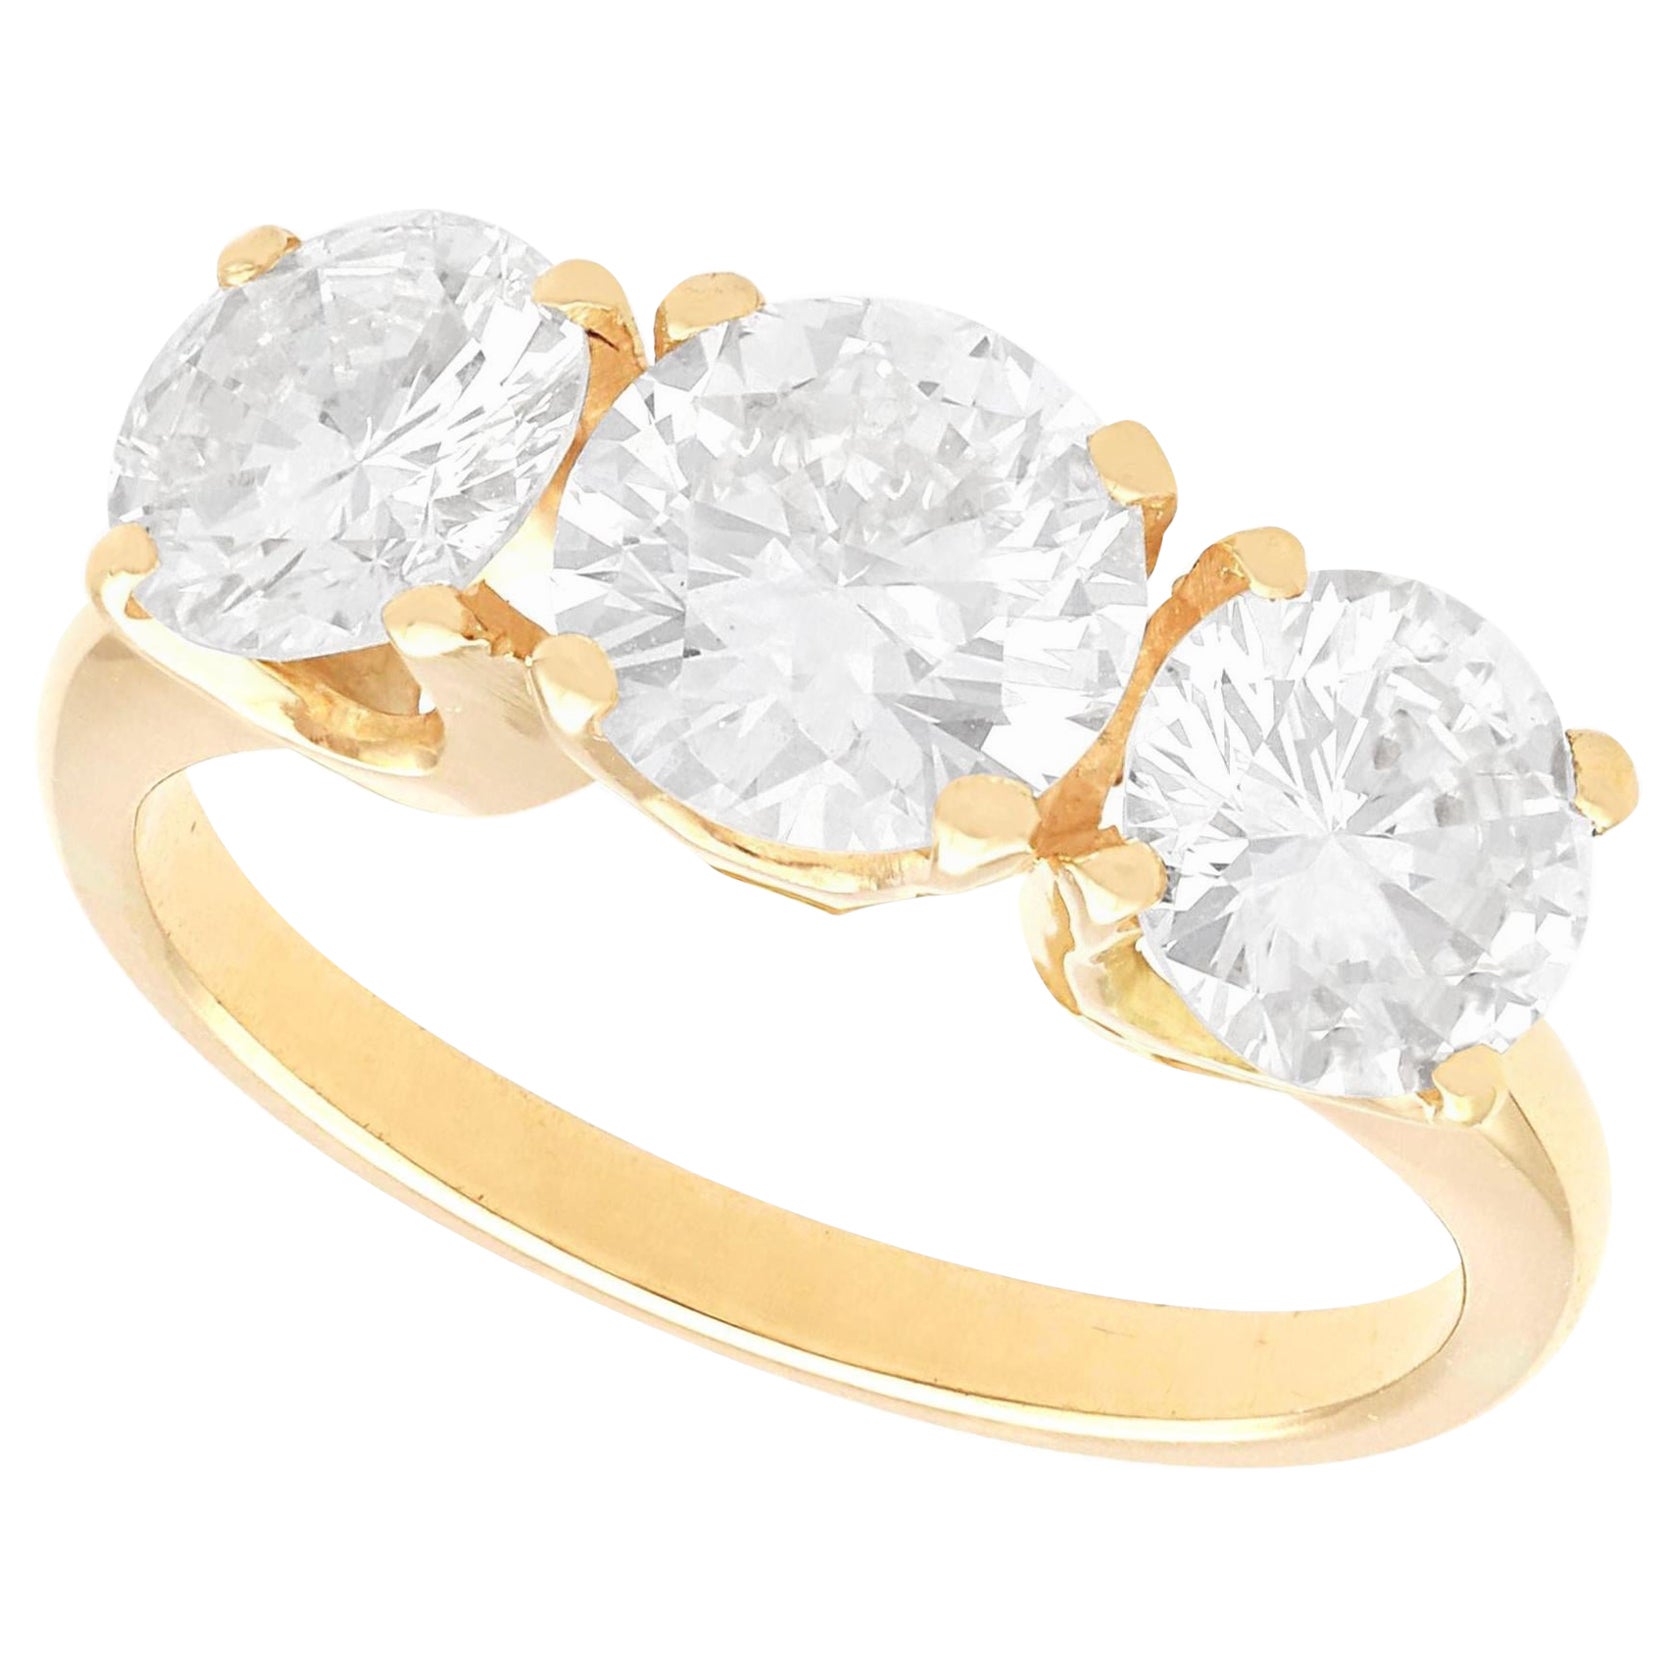 Vintage 3.49 Carat Diamond and Yellow Gold Trilogy Ring